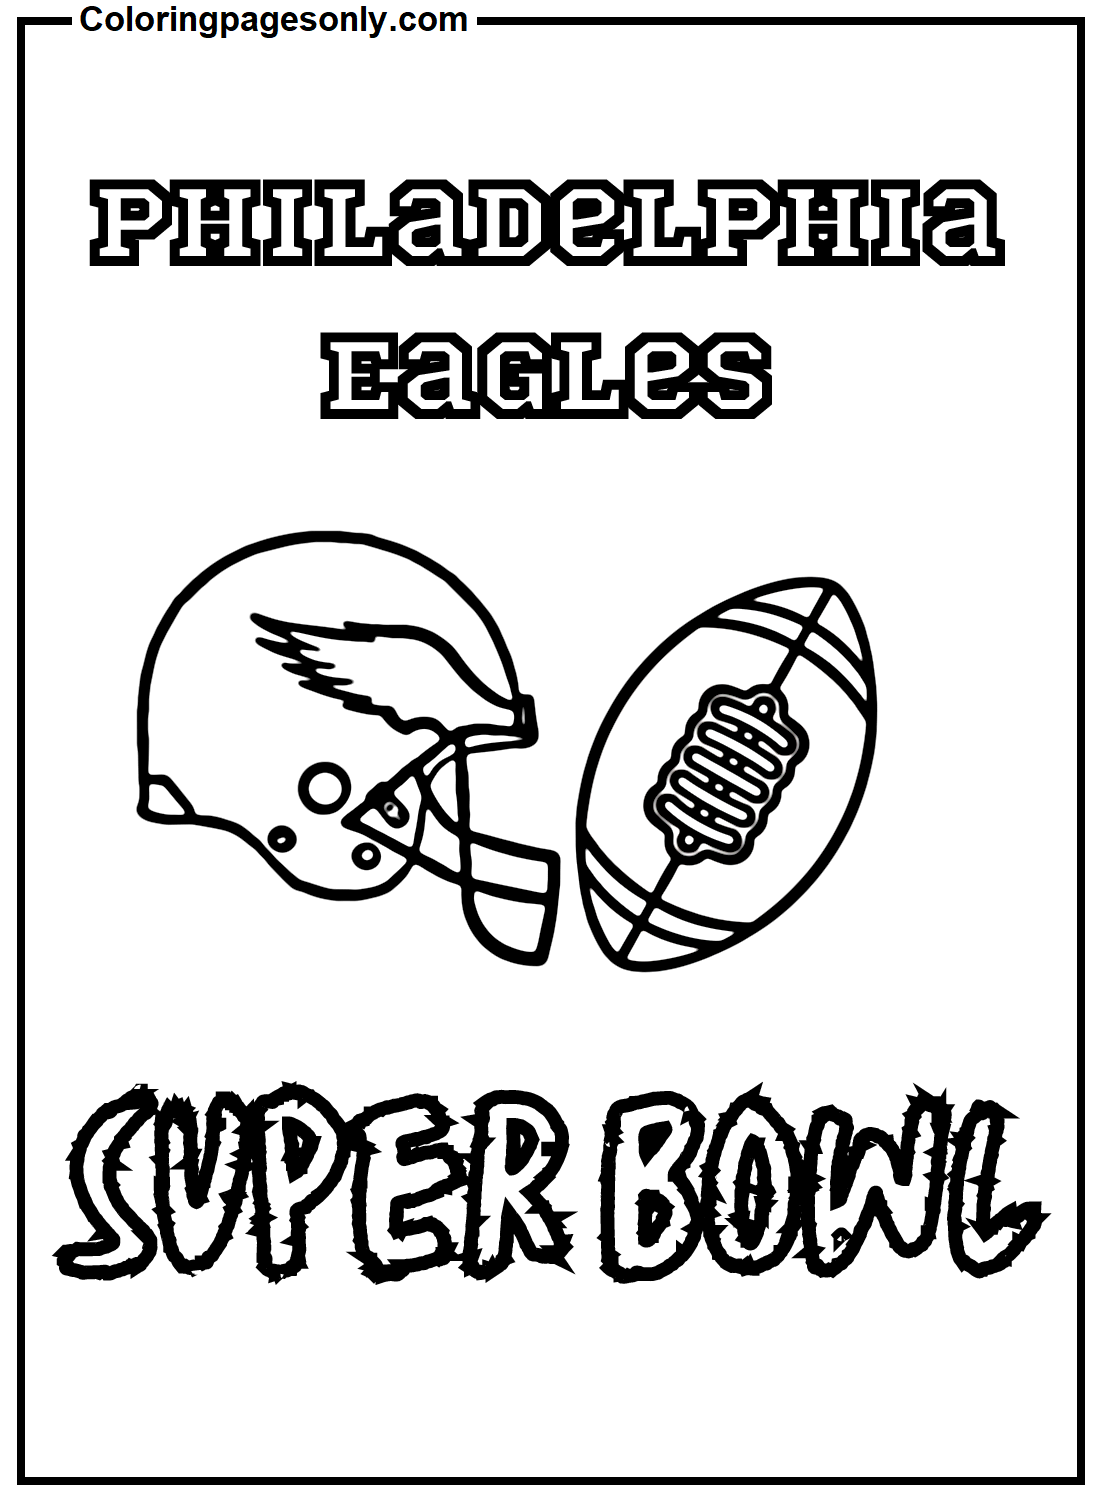 Imagem do Super Bowl do Philadelphia Eagles do Philadelphia Eagles